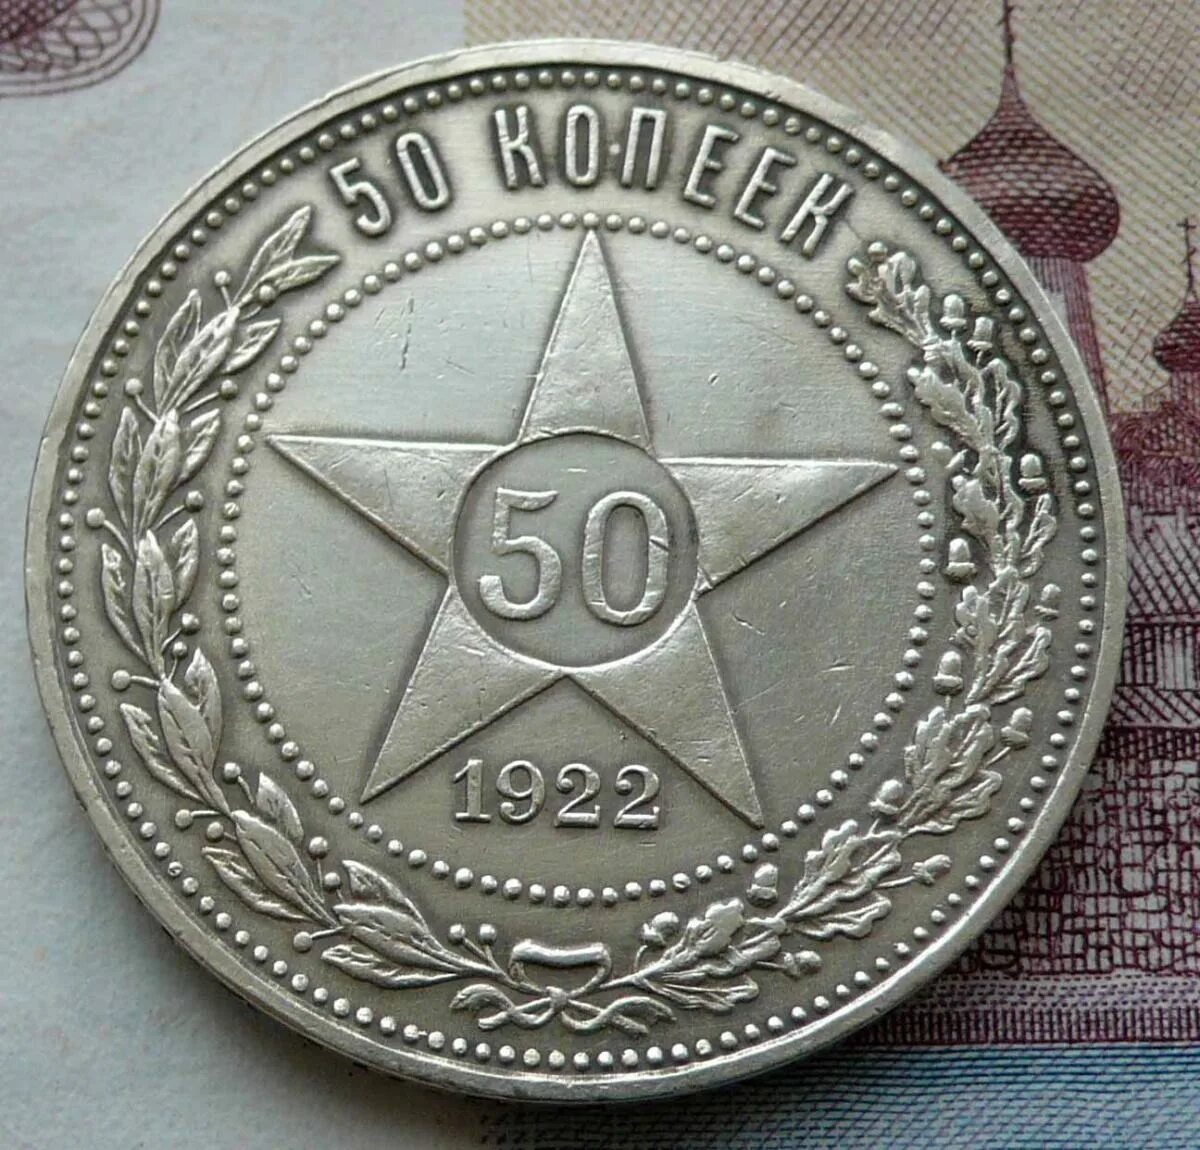 Серебро монета 50 копеек. 50 Копеек 1922 серебро. Монеты 1922 50 копеек серебро. Монета 50 копеек 1922 года серебро. Серебряная монета 50 копеек 1922.